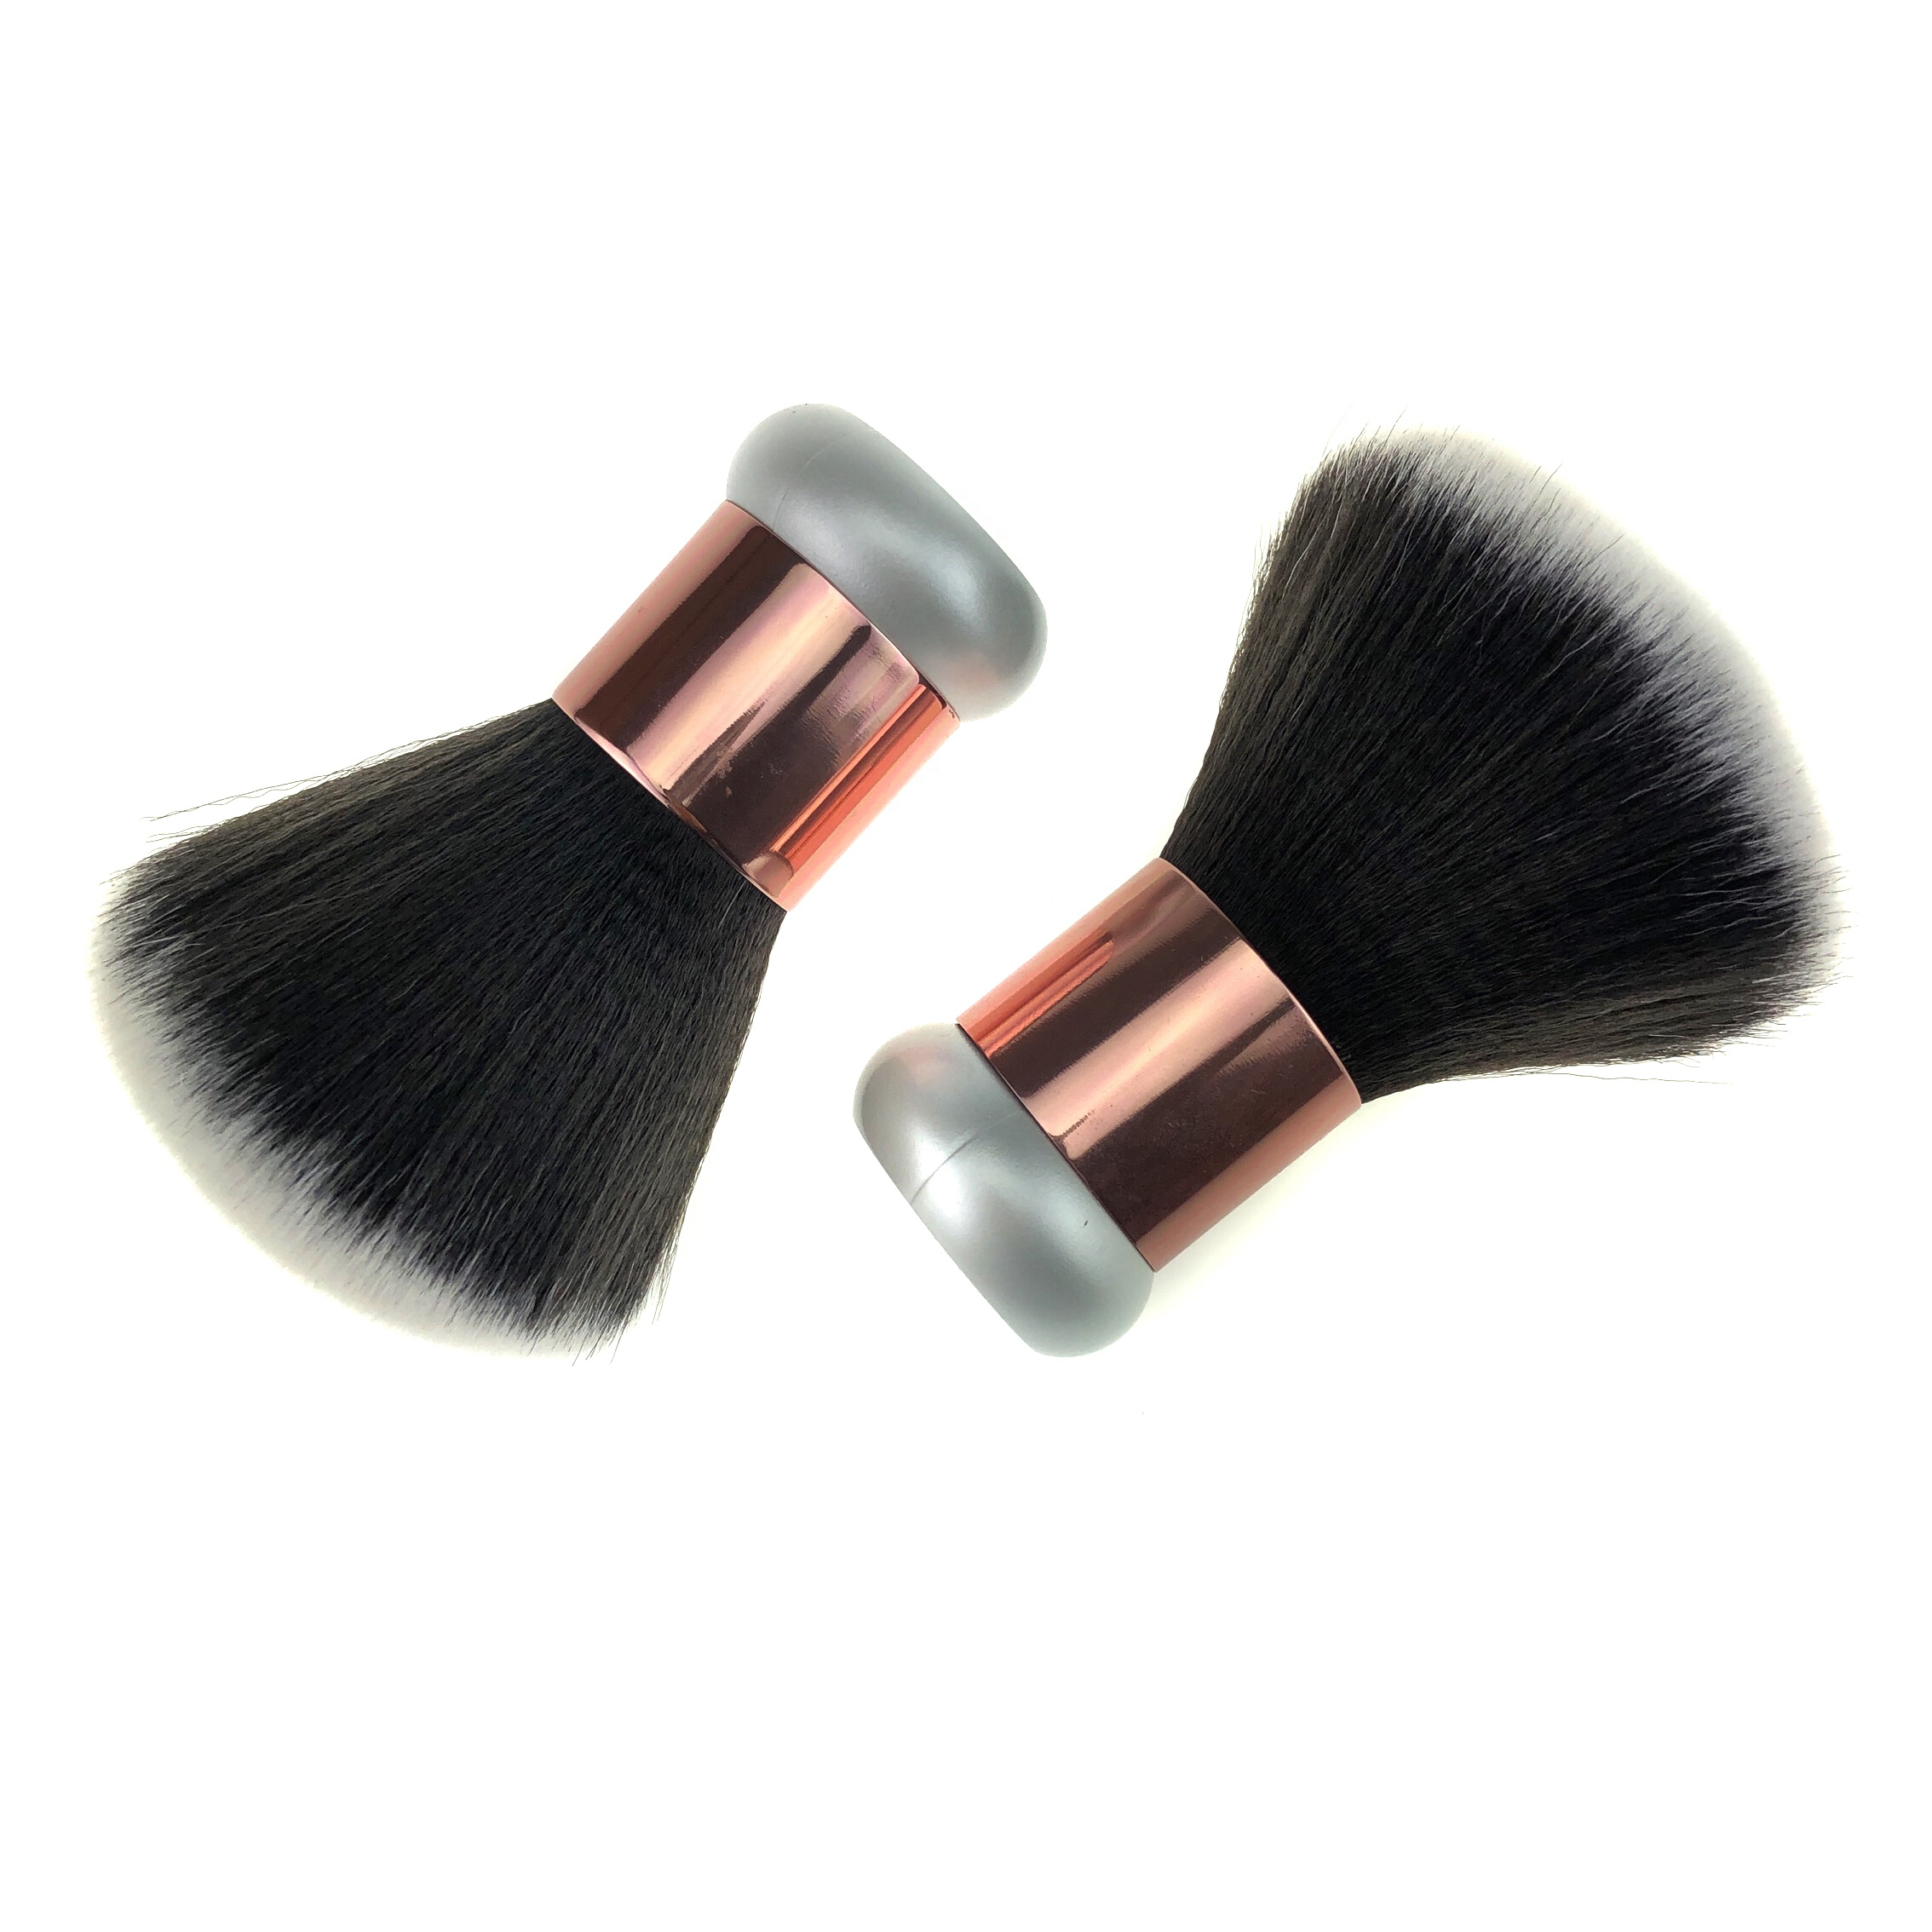 Enkele borstel Hot Selling Face Body Makeup Brush Draagbare cosmetica-tool voor Blush Bronzer Neck